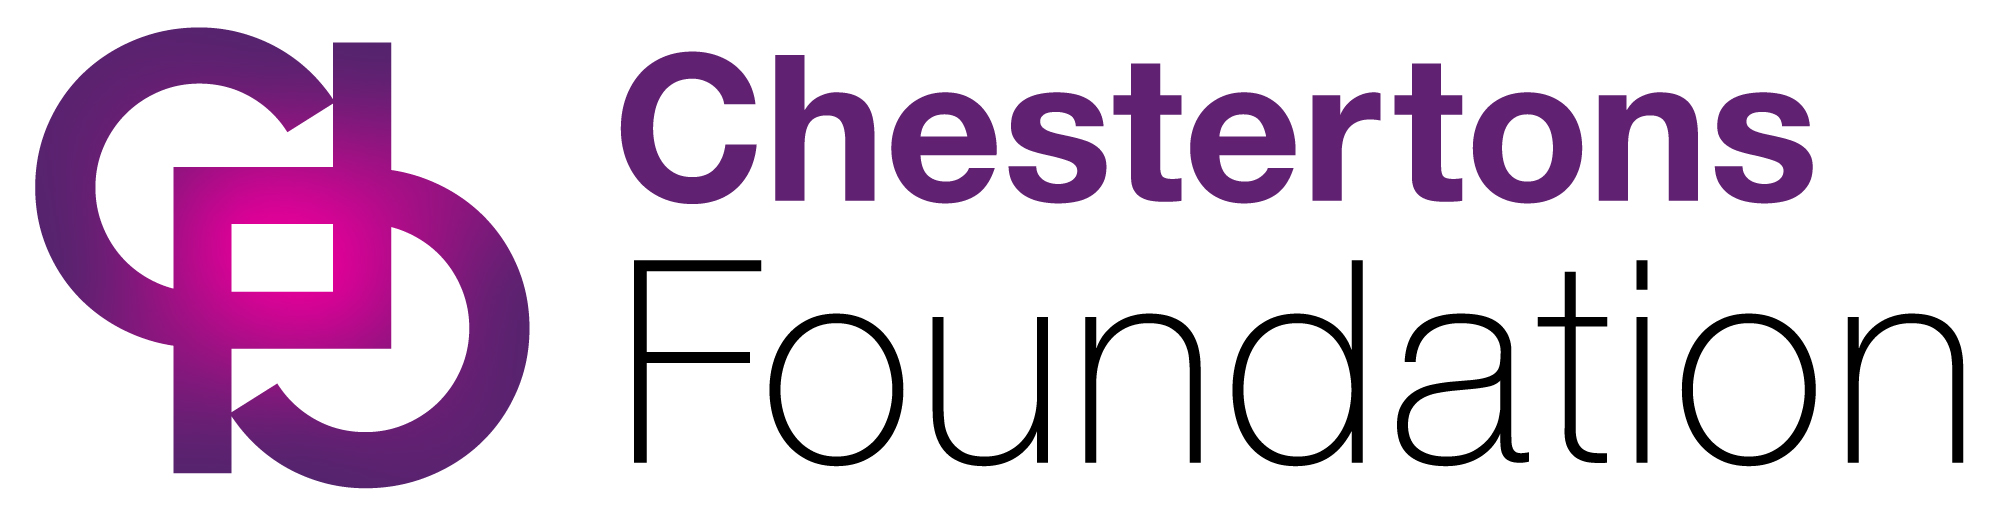 Chestertons Foundation